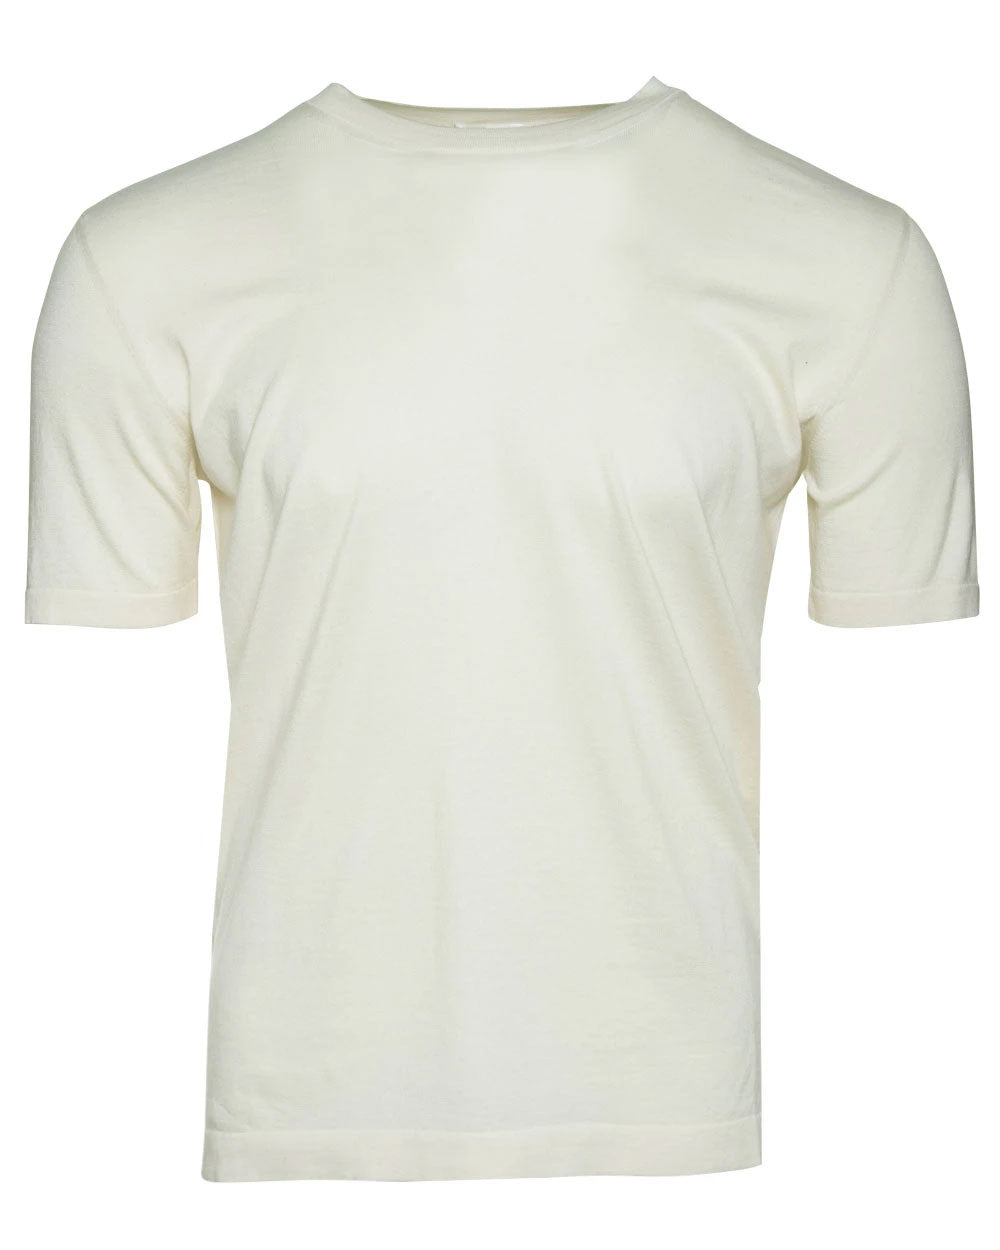 Ivory Cashmere Blend T-Shirt